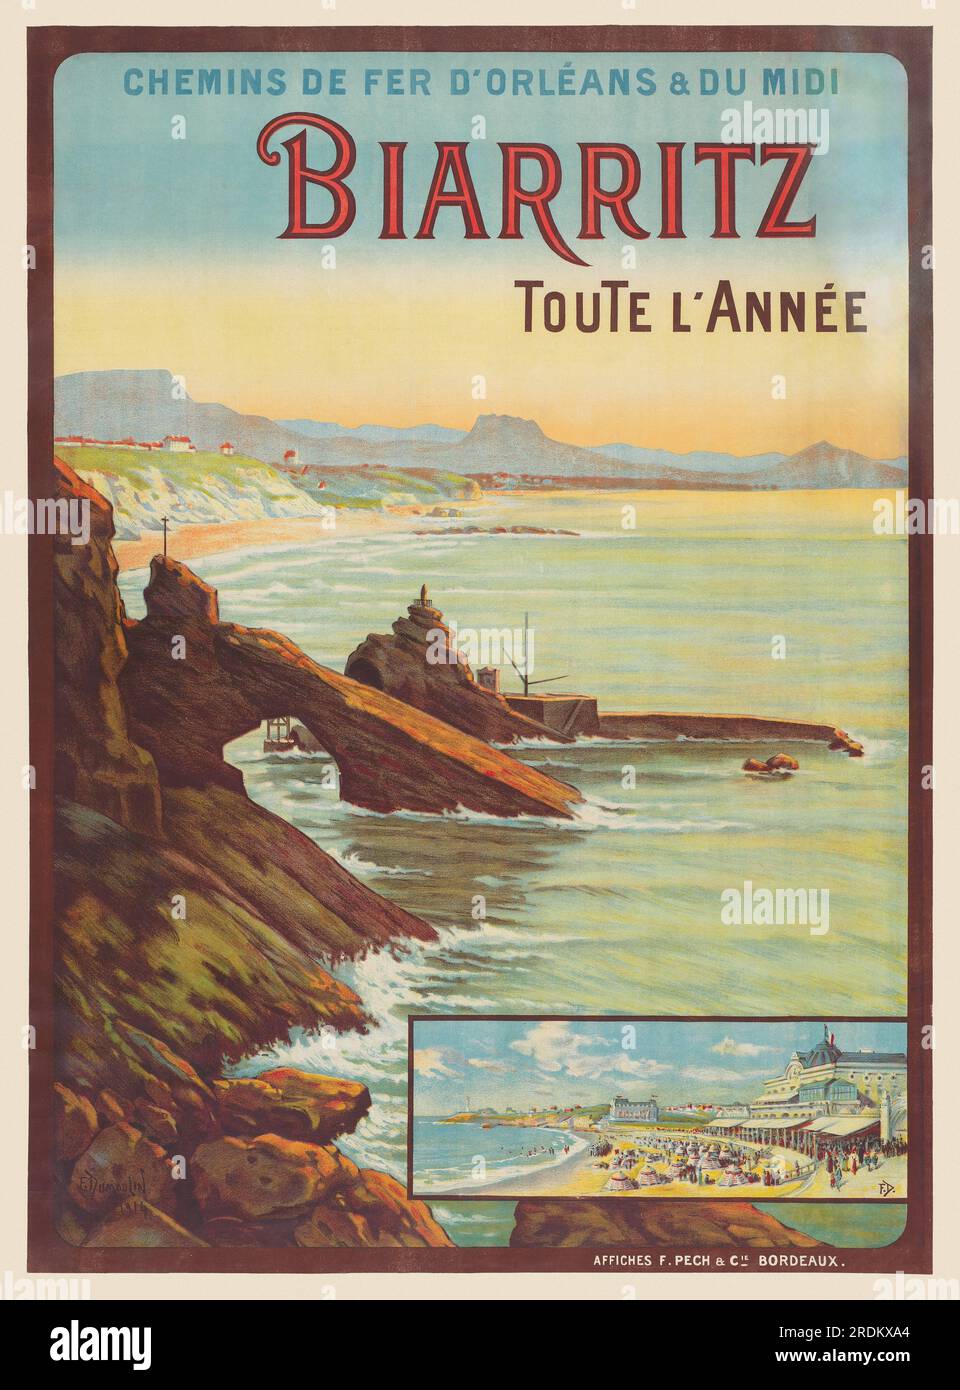 Chemins de fer d'Orleans et du Midi. Biarritz toute l'année di F. Dumoulin (date sconosciute). Poster pubblicato nel 1914 in Francia. Foto Stock